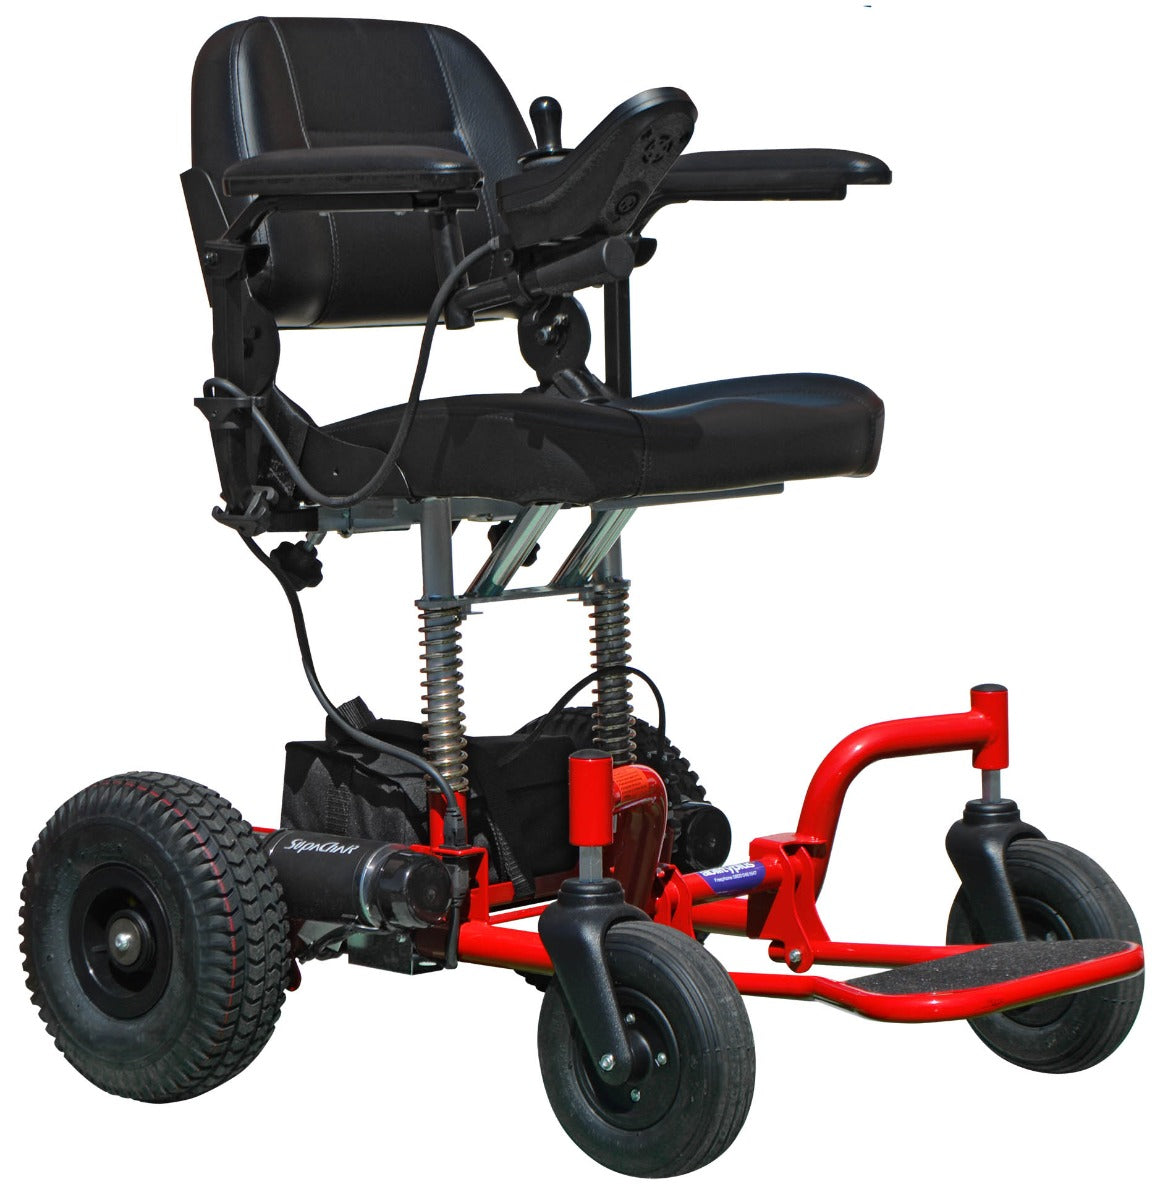 New SupaChair Safari Sport Lightweight Transportable Powerchair with Suspension